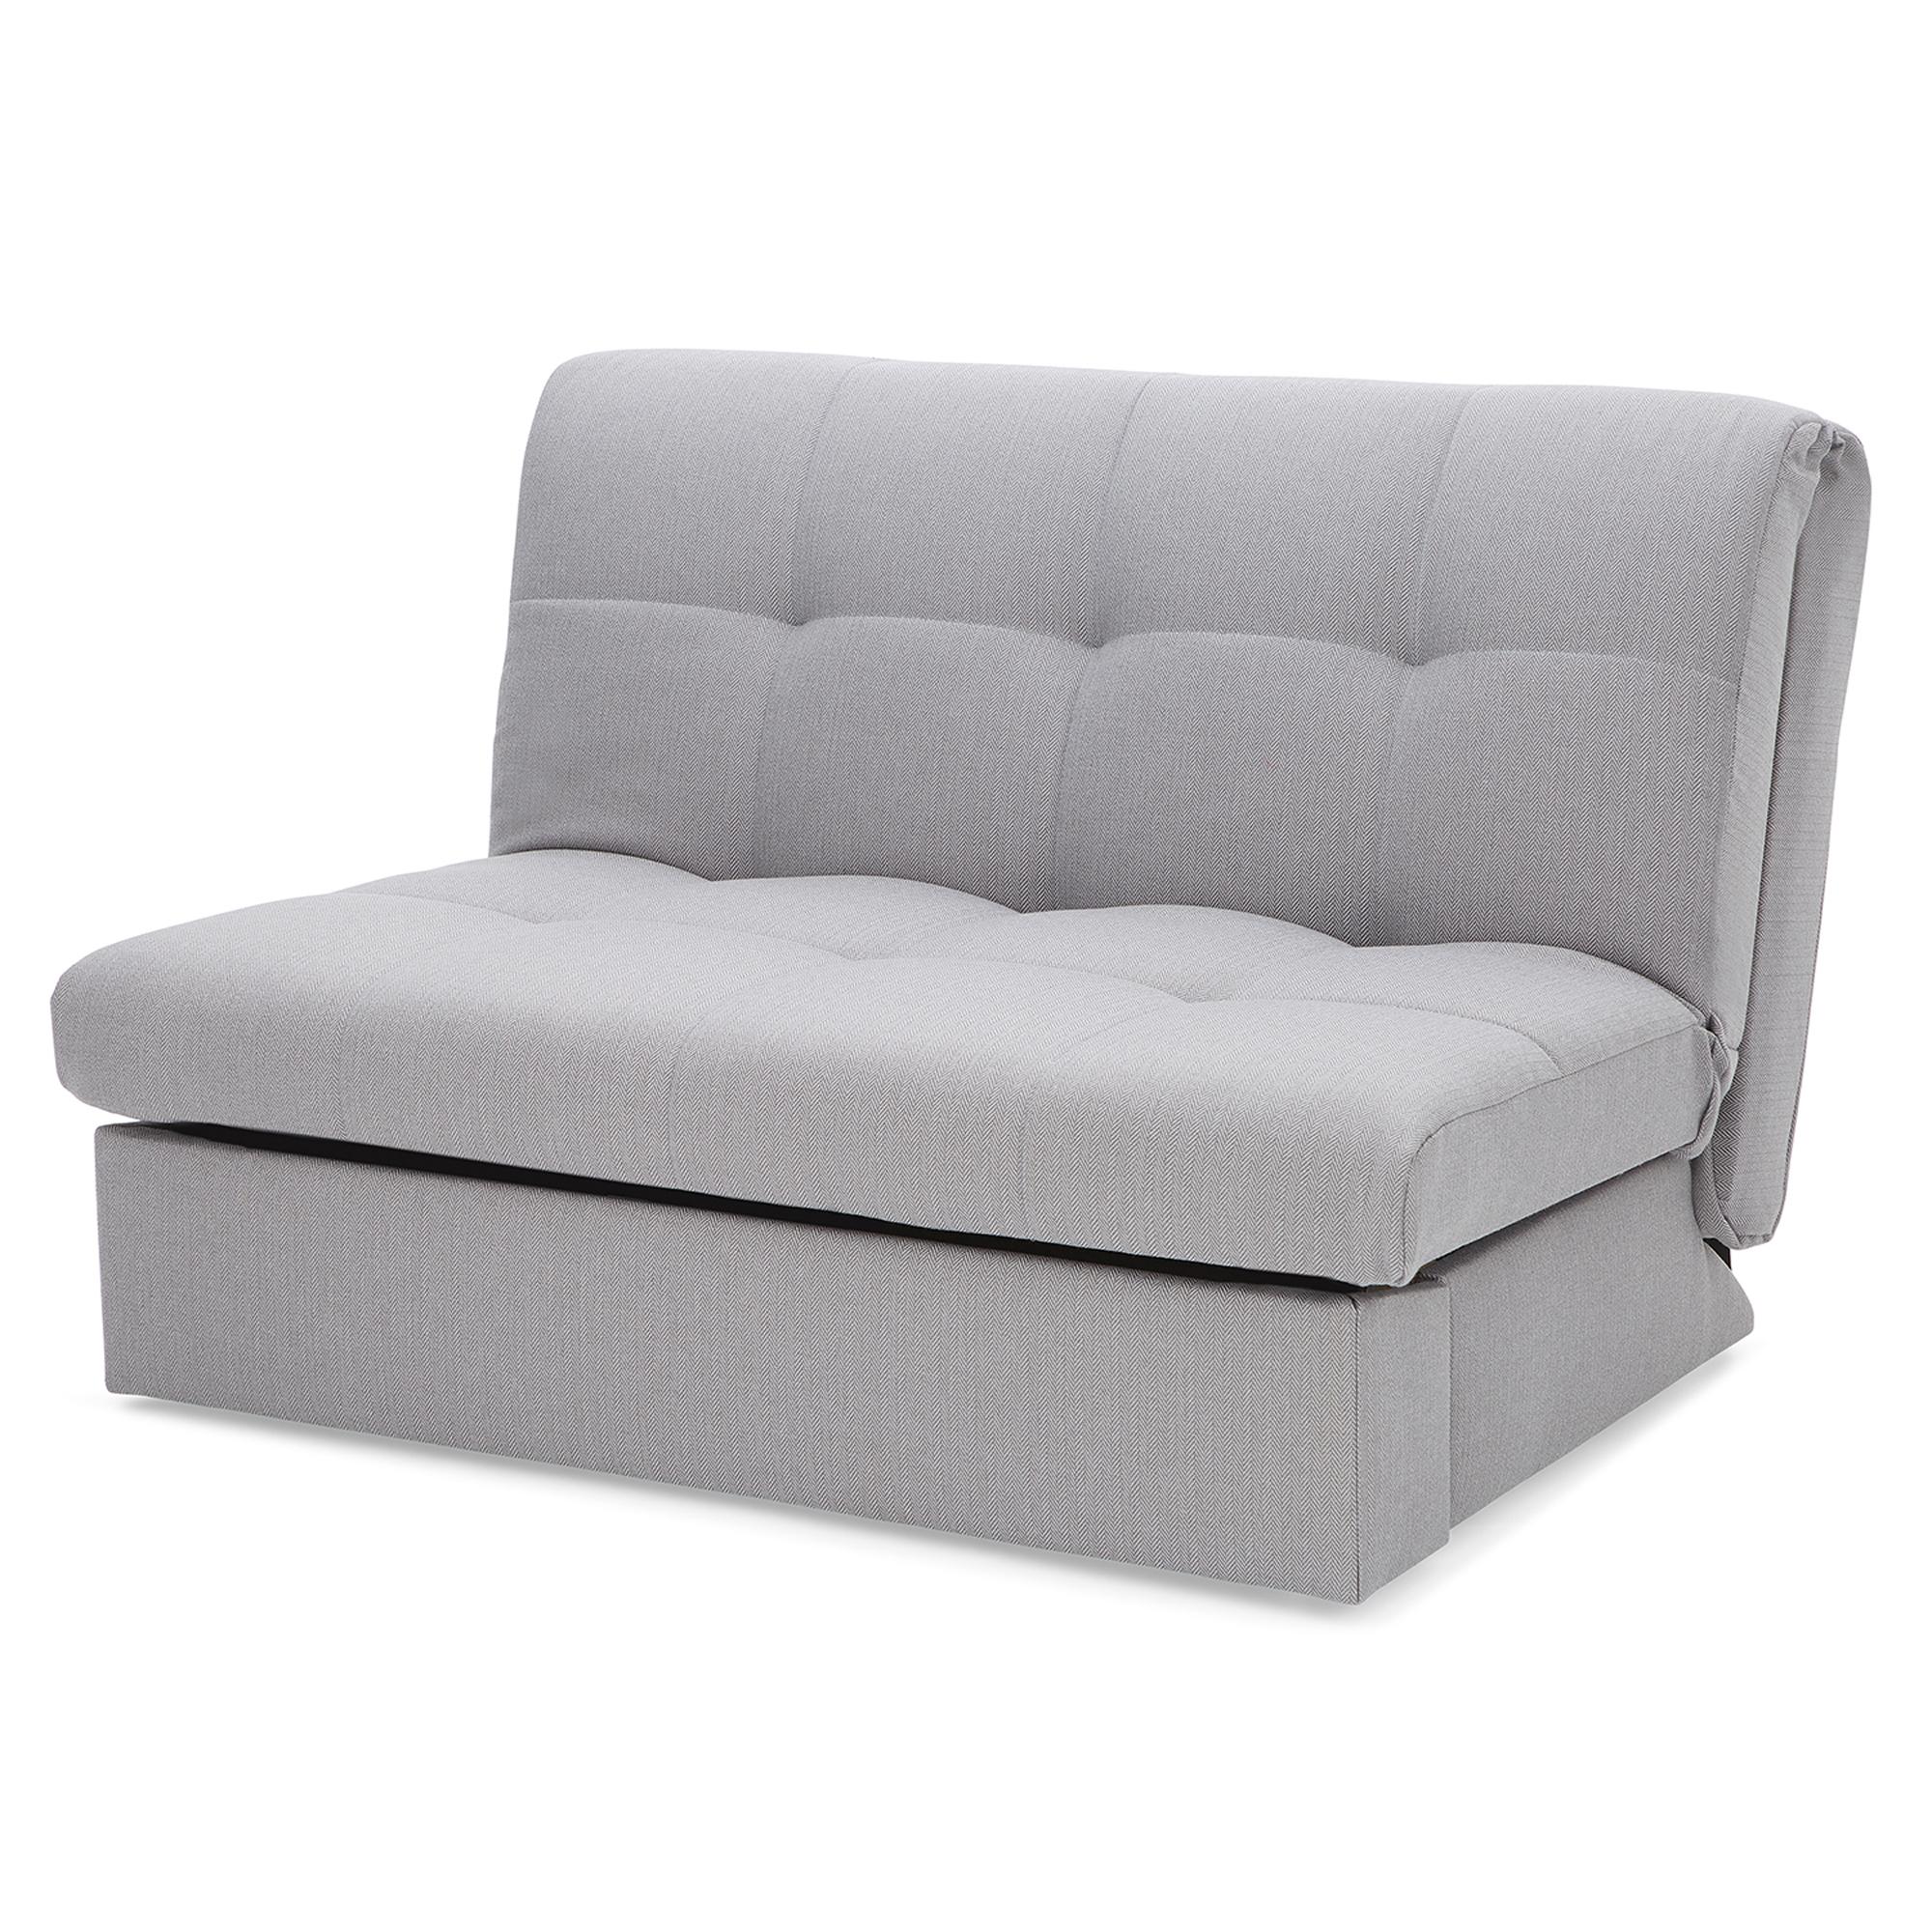 Grey Rowan Small Double Sofa Bed | Dunelm